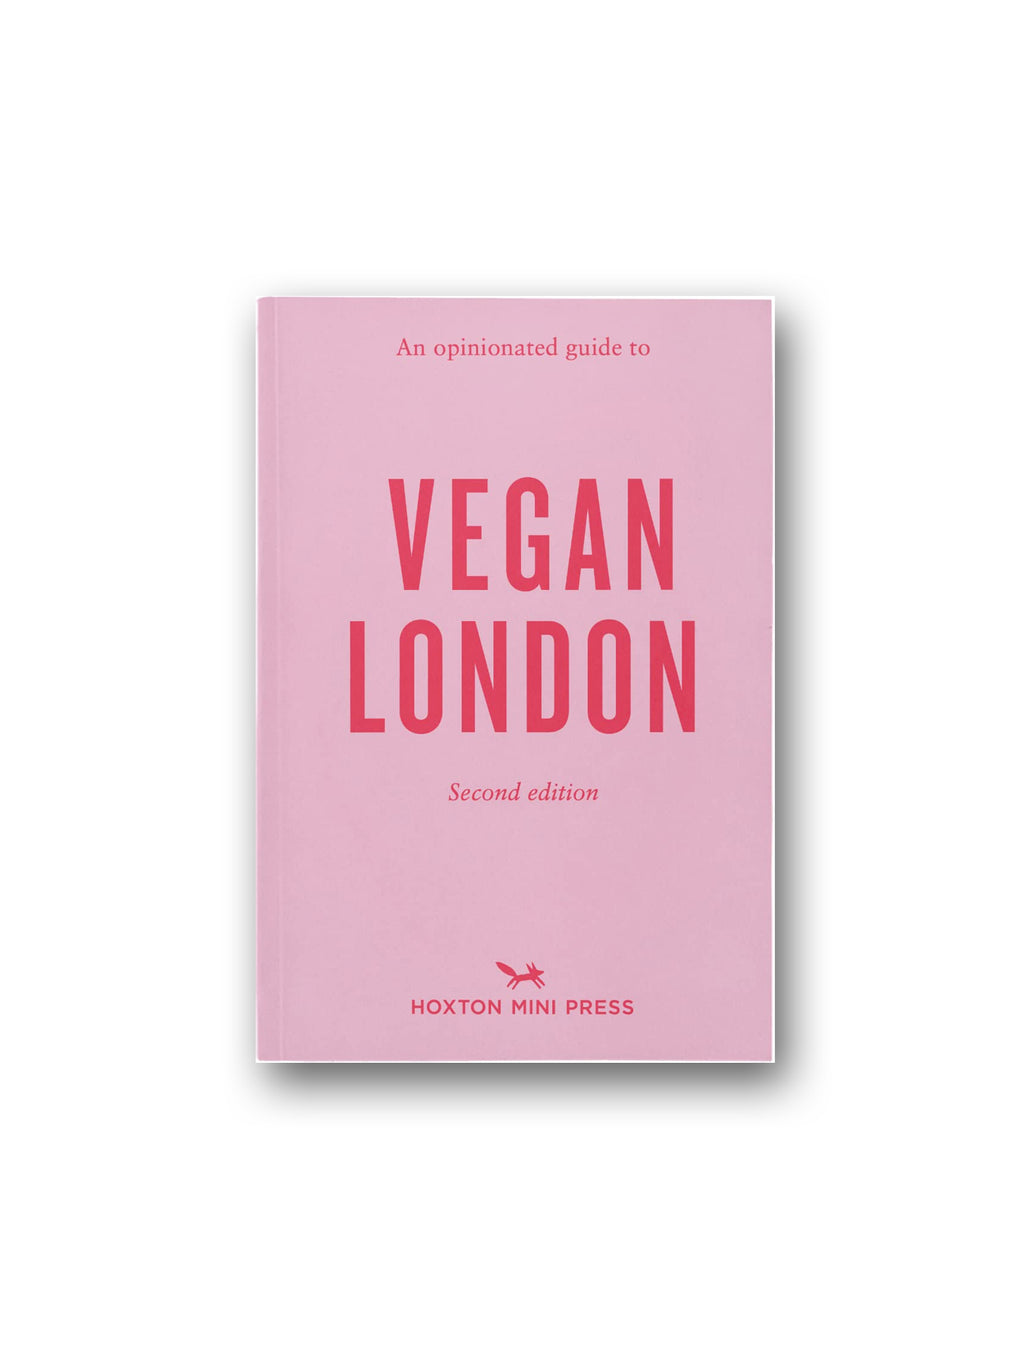 Vegan London